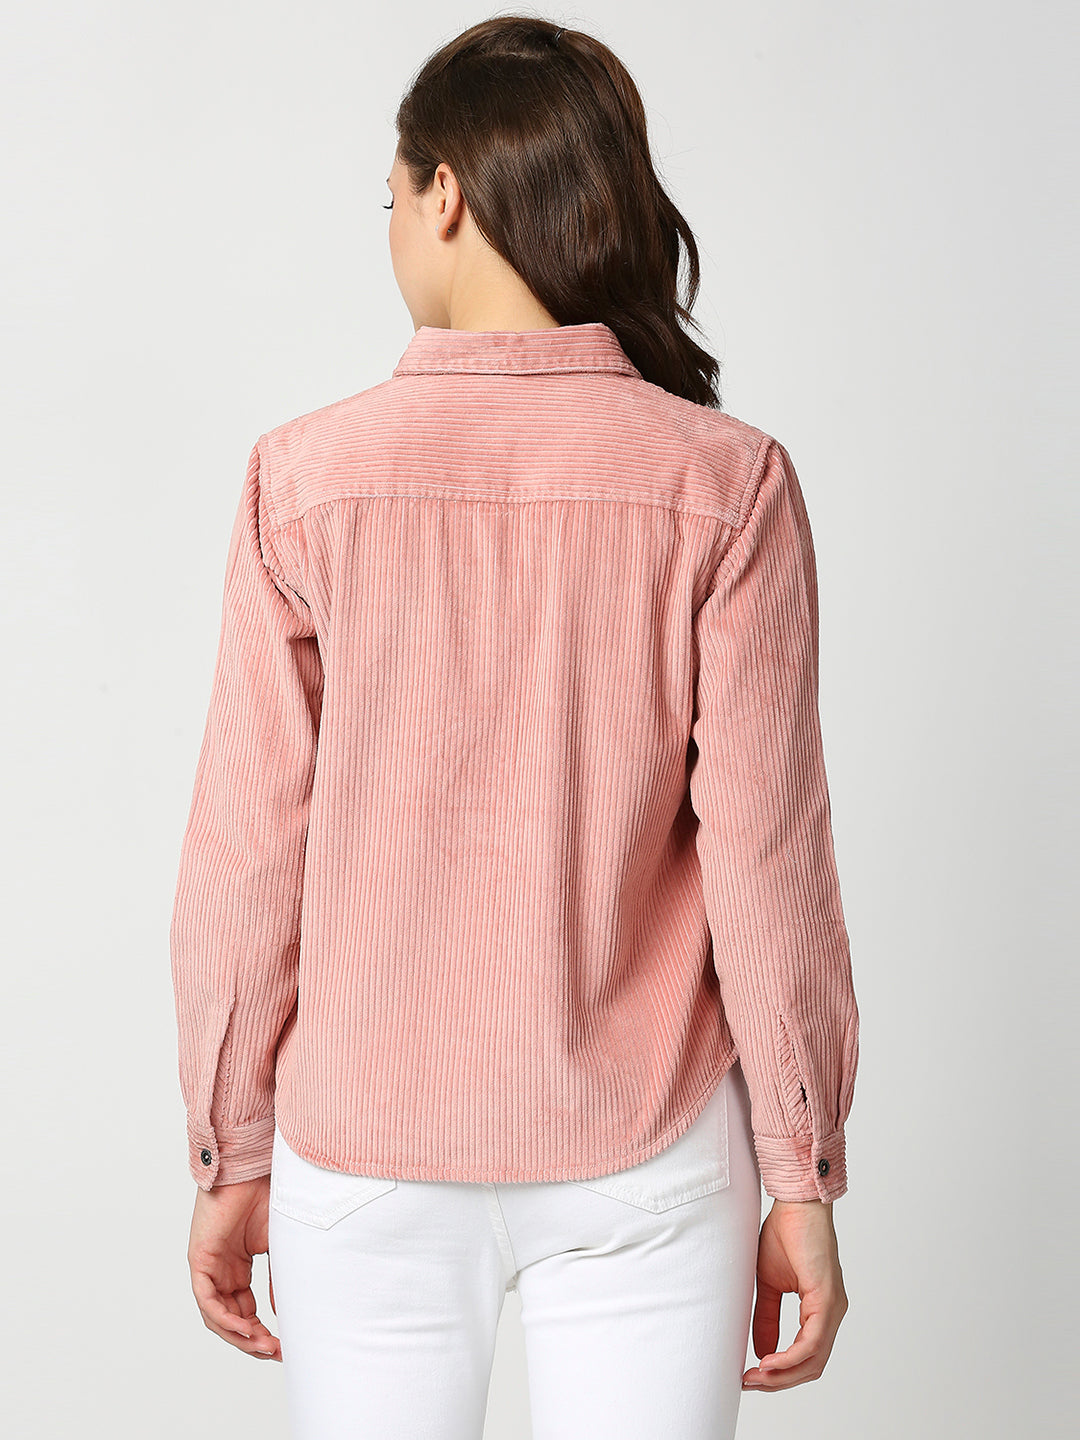 Buy Blamblack Women's Pink Color Baggy Full Sleeves Shirt